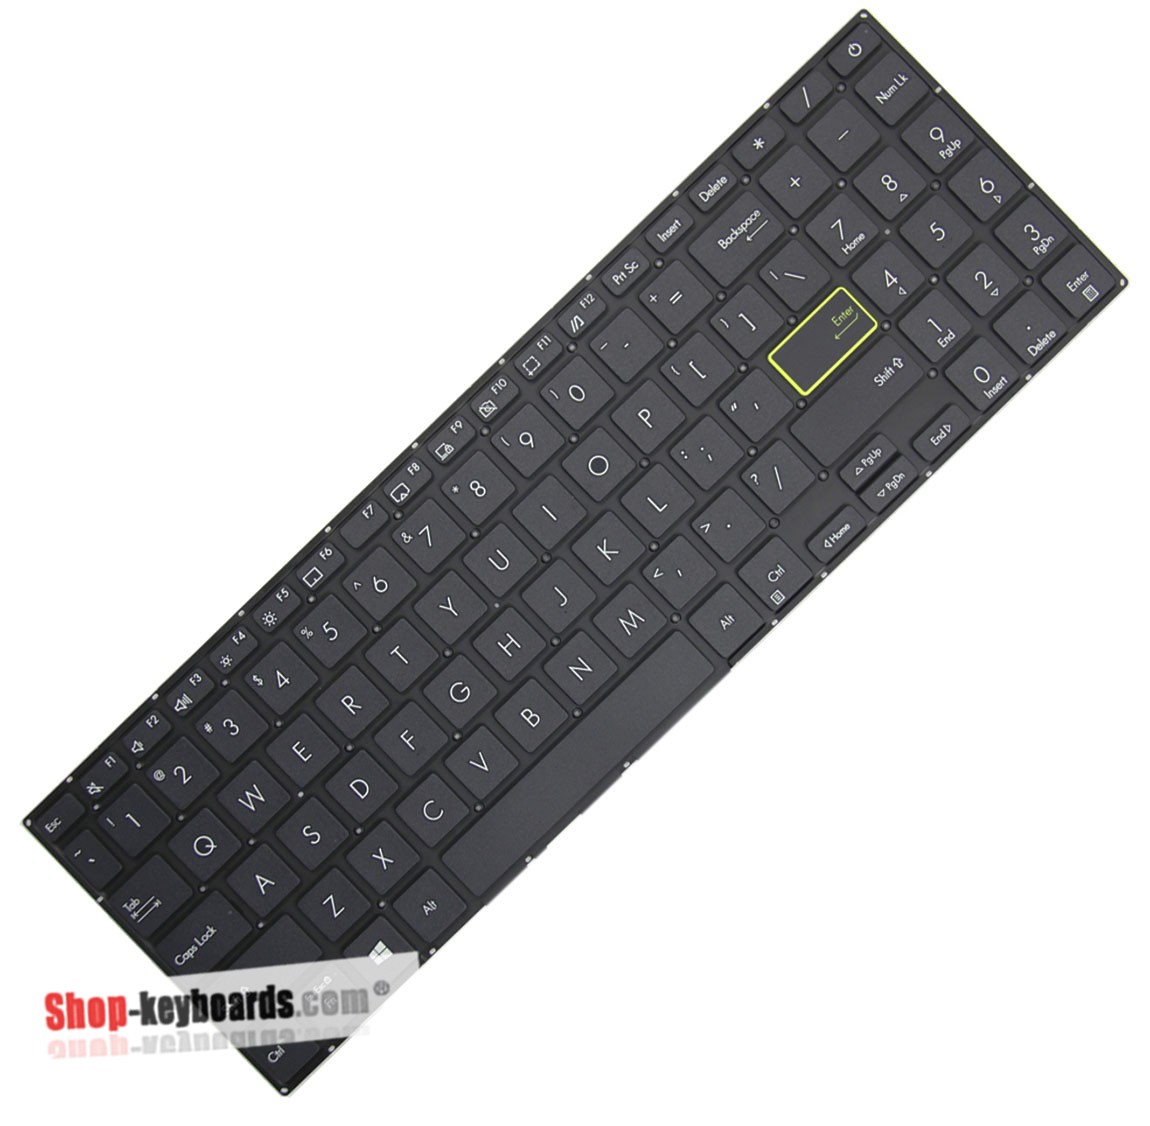 Asus 0KNB0-510GWB00  Keyboard replacement